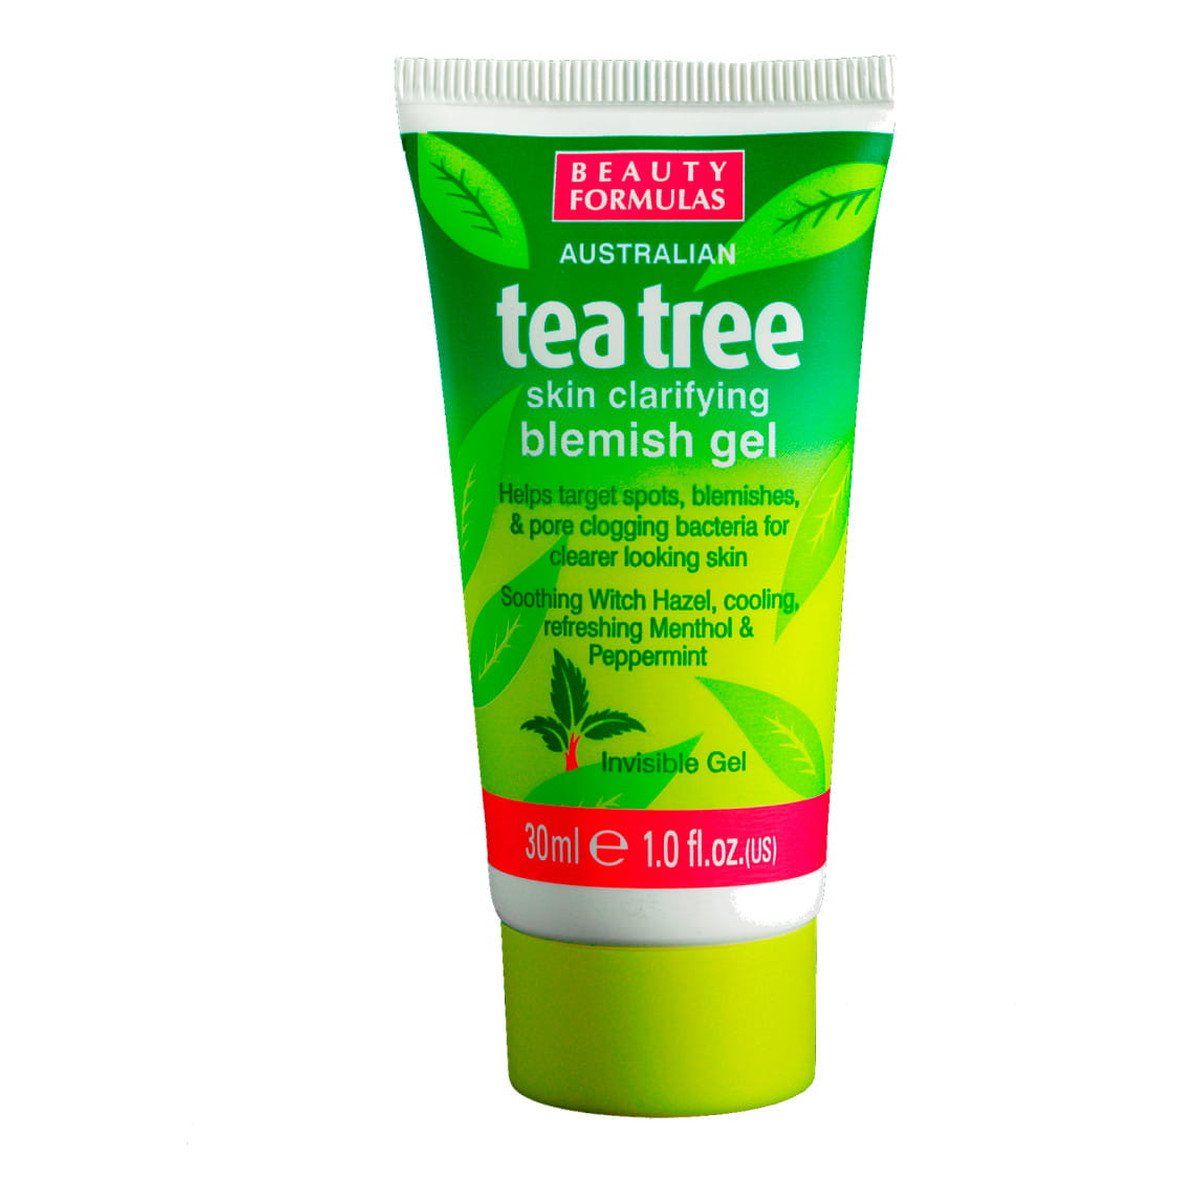 Beauty Formulas Tea Tree Skin Clarifying Blemish Gel Punktowa Kuracja na Wypryski 30ml